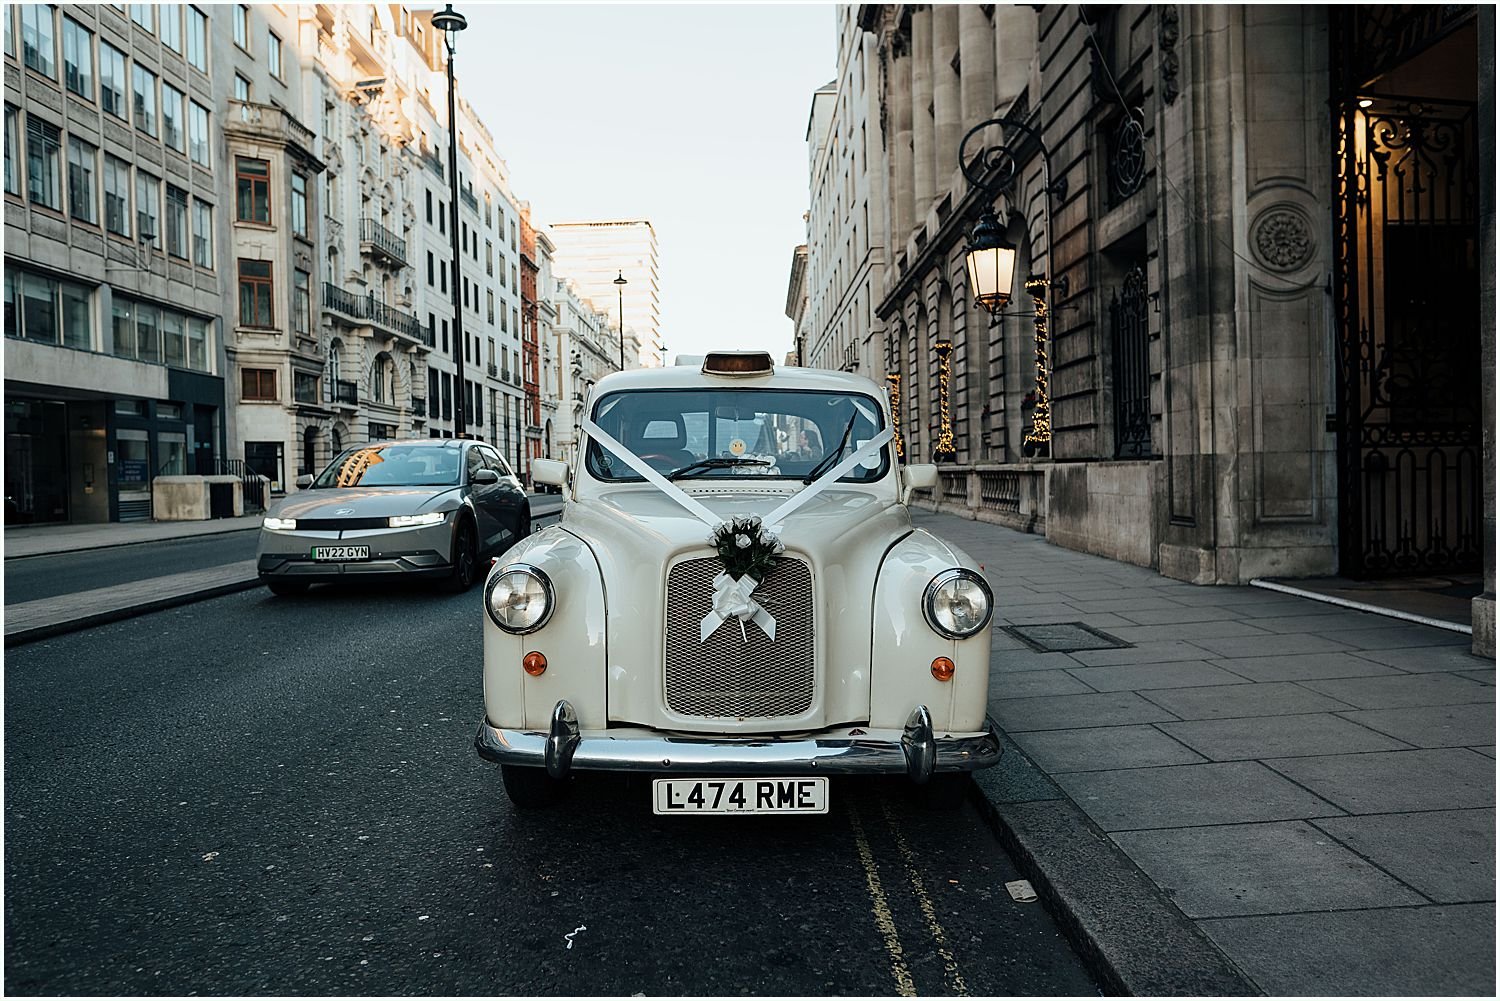 Vintage London white wedding taxi outside Royal Automobile Club